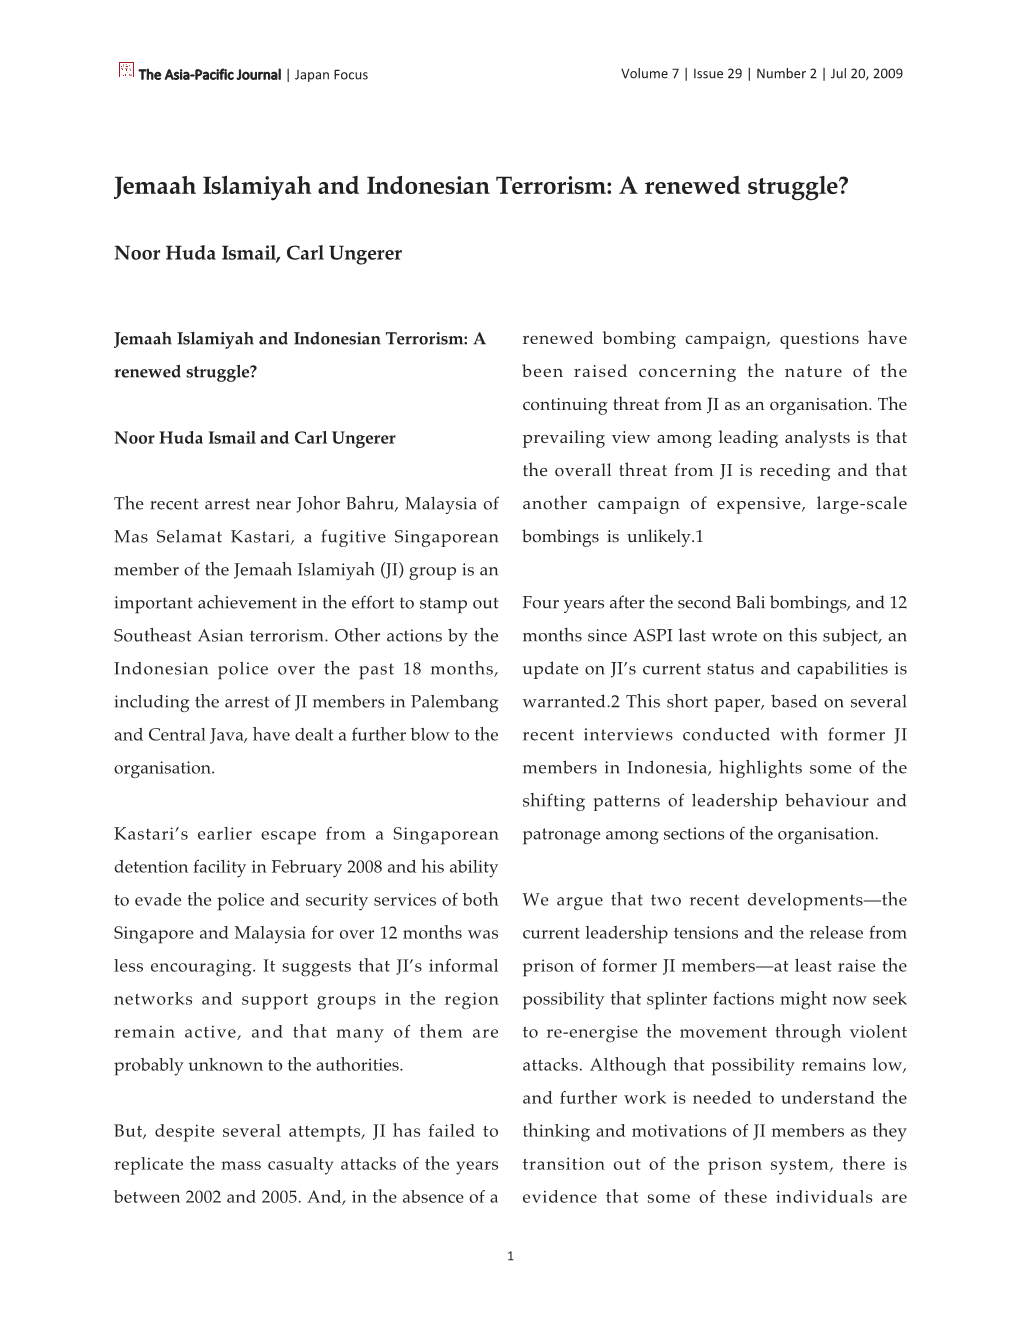 Jemaah Islamiyah and Indonesian Terrorism: a Renewed Struggle?